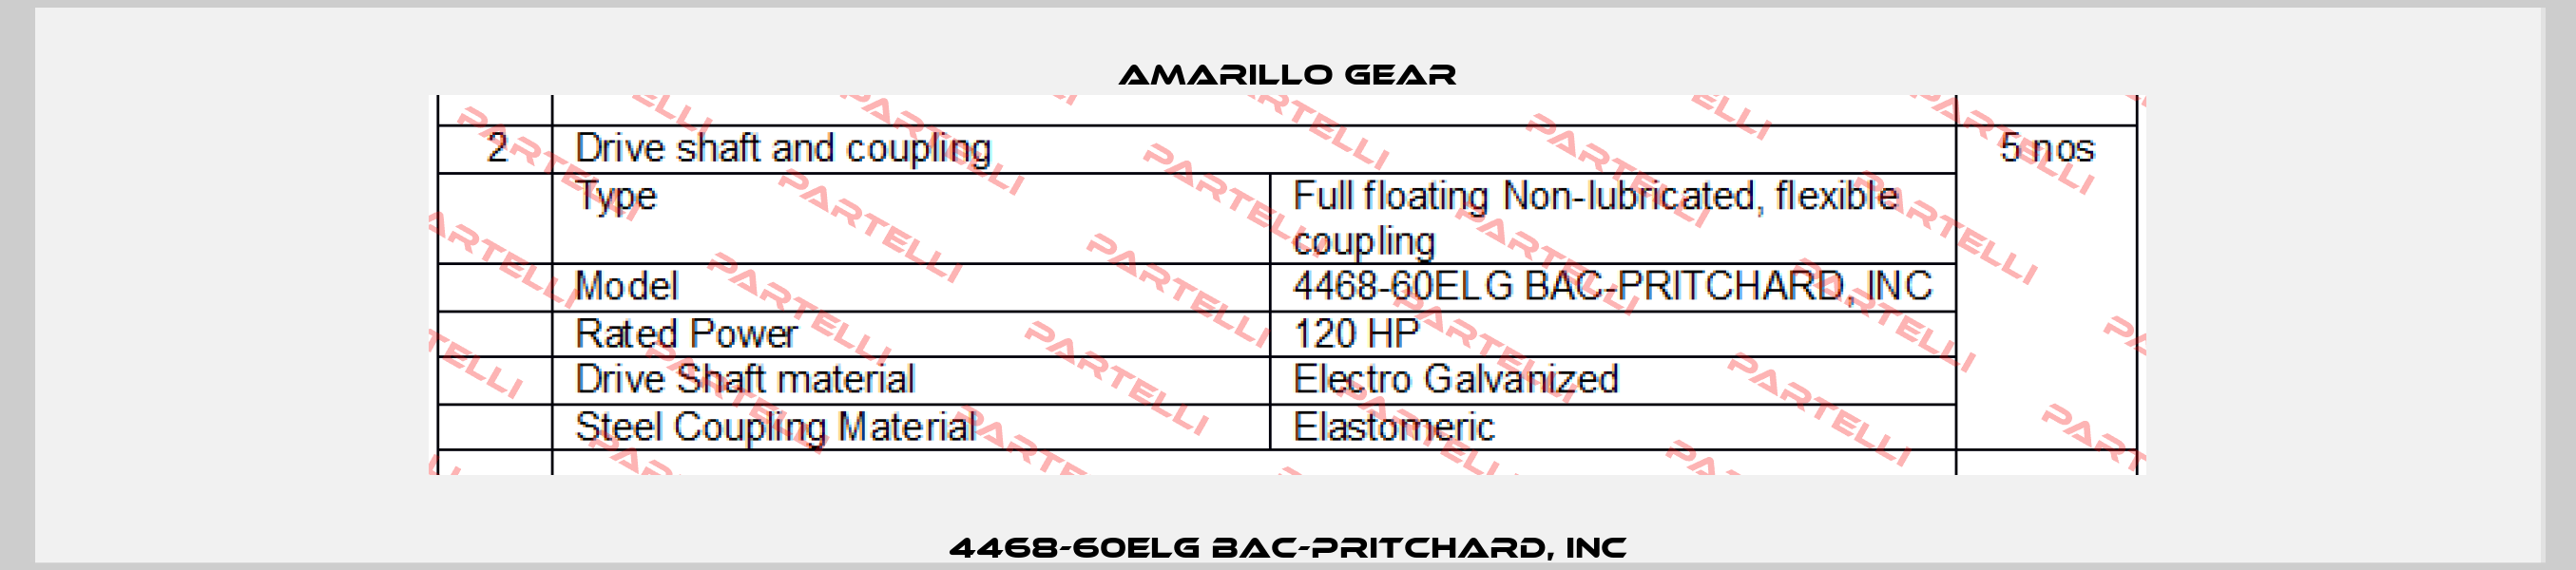 4468-60ELG BAC-PRITCHARD, INC Amarillo Gear